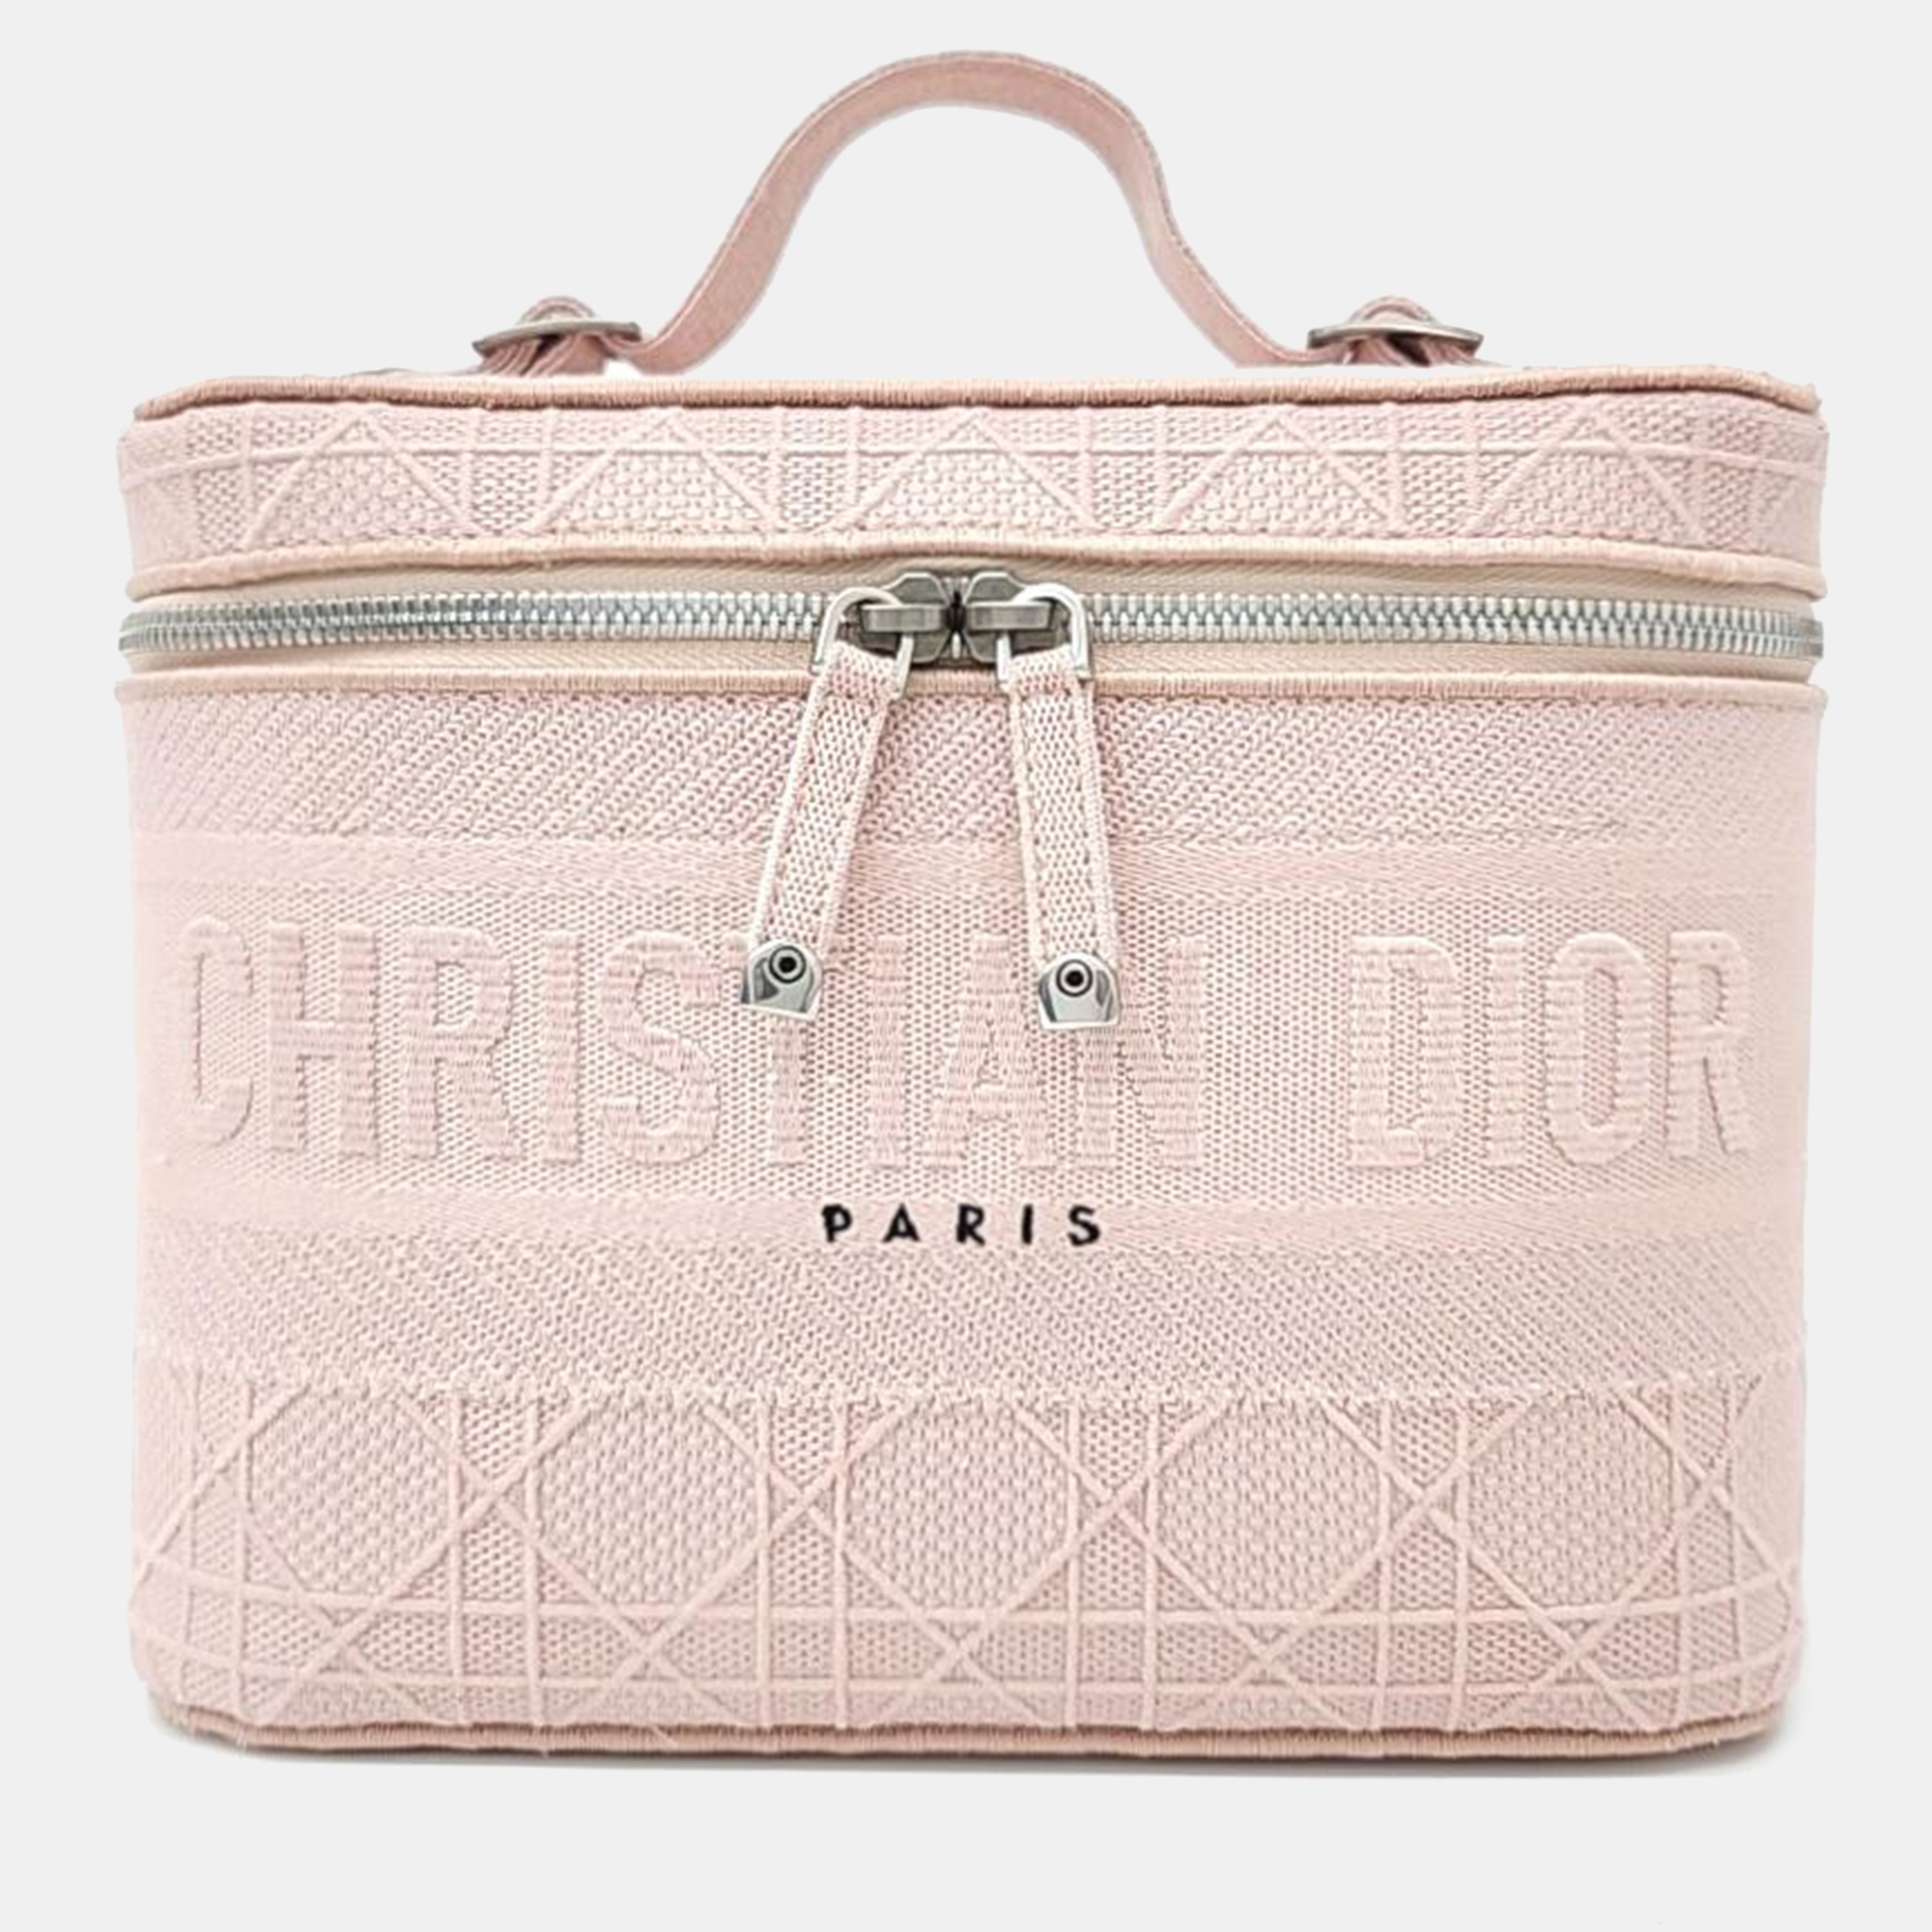 Christian dior cannage embroidery travel vanity handbag